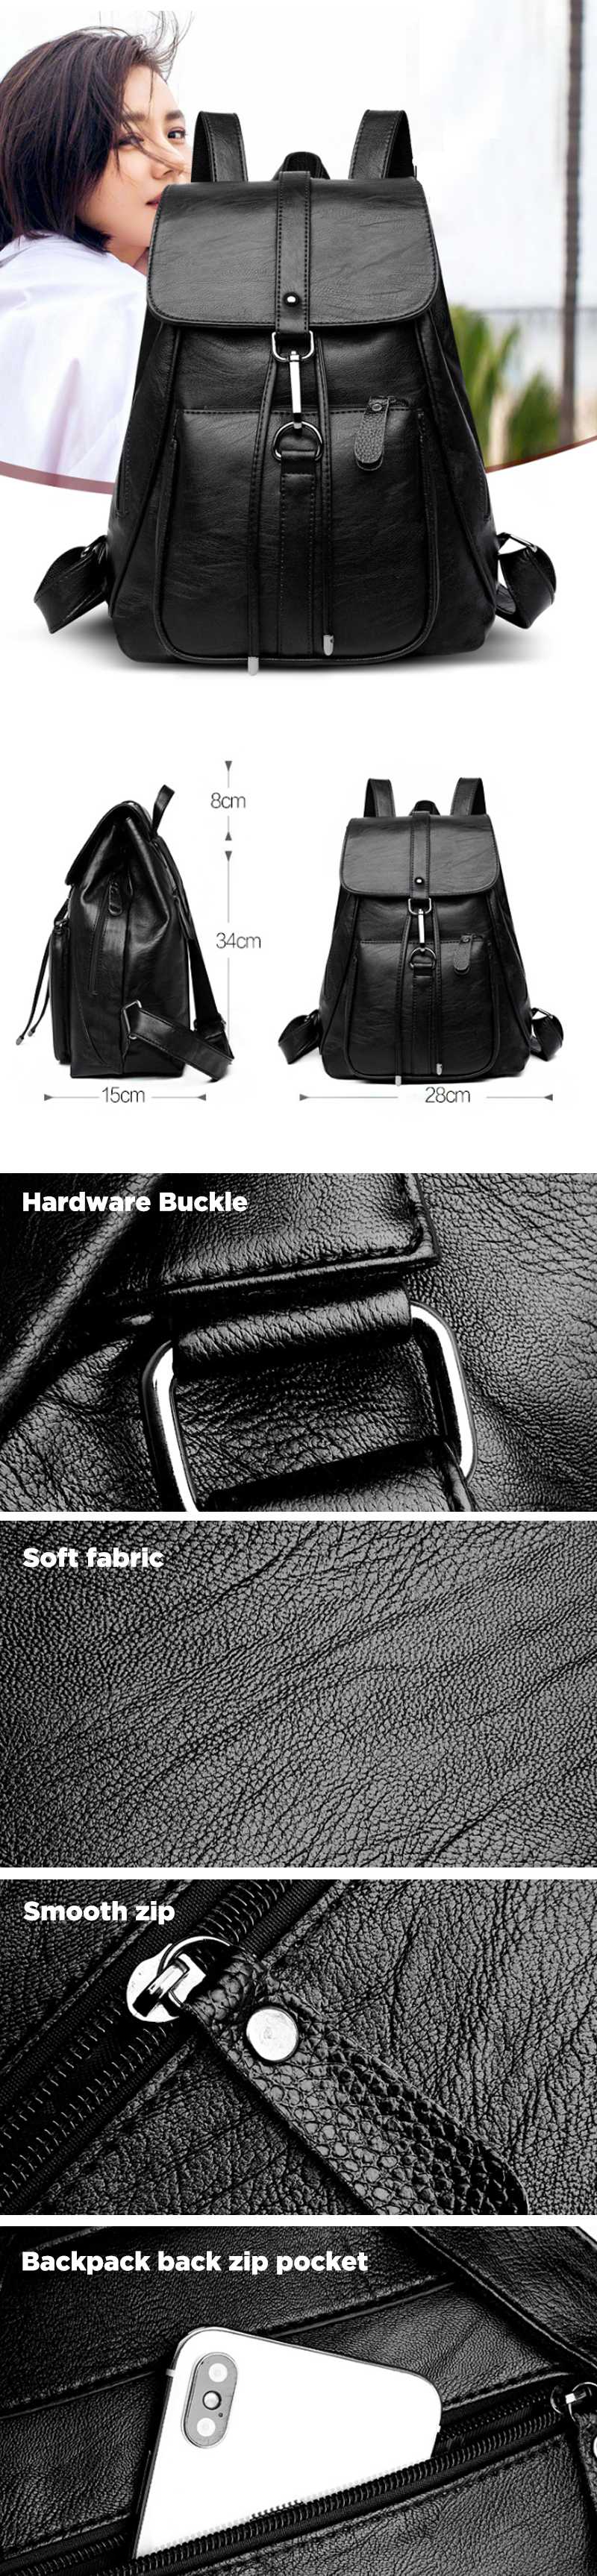 Soft-PU-Leather-Backpack-Ladies-Casual-Shoulder-Bag-Outdoor-Hunting-Travel-Rucksack-1483795-1